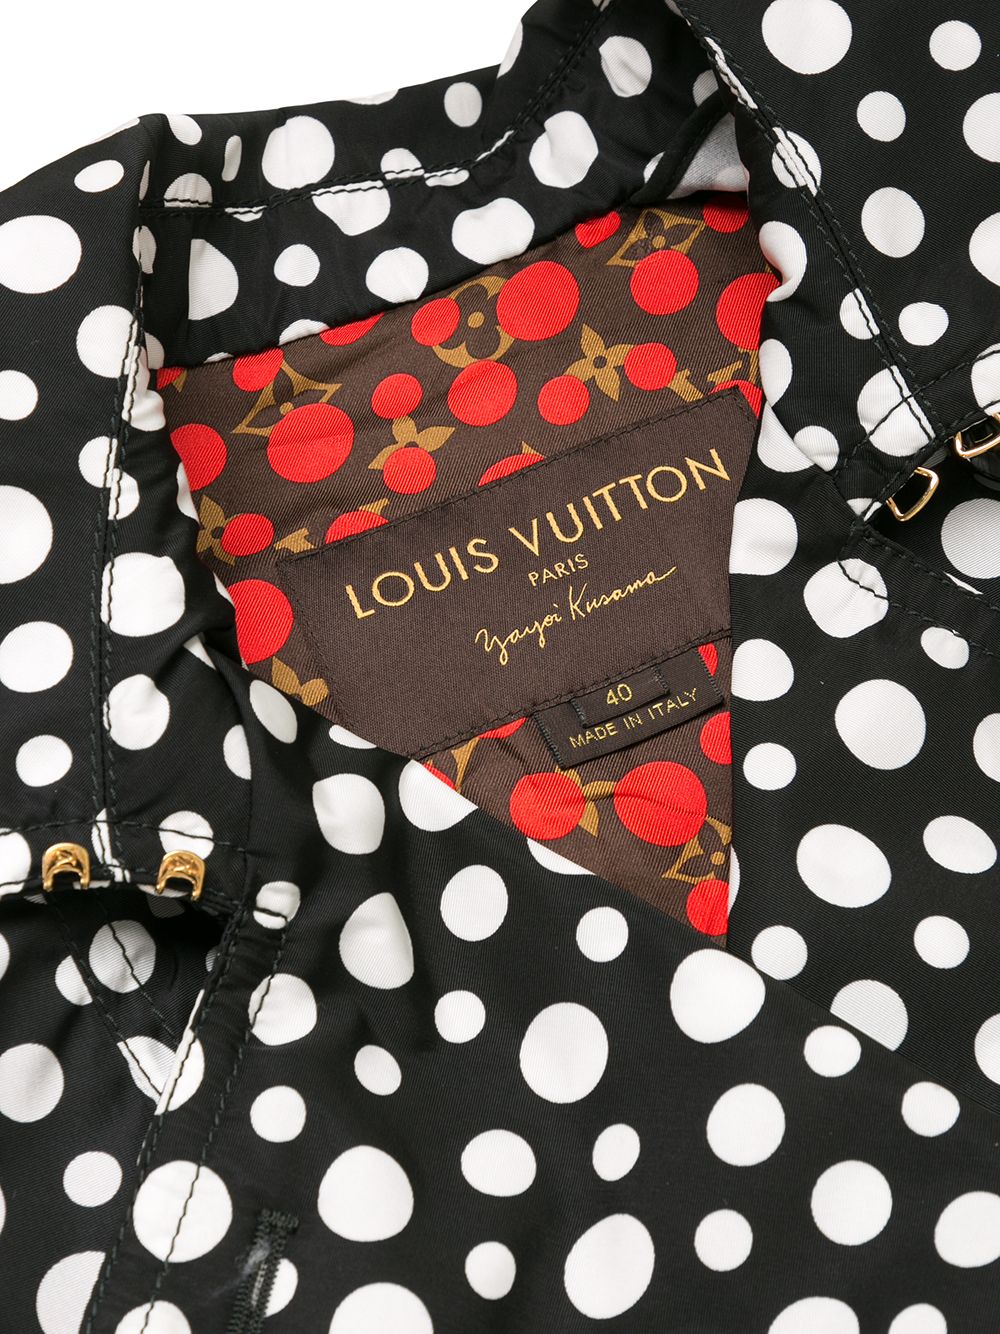 Louis Vuitton x Yayoi Kusama Painted Dots Trench Coat